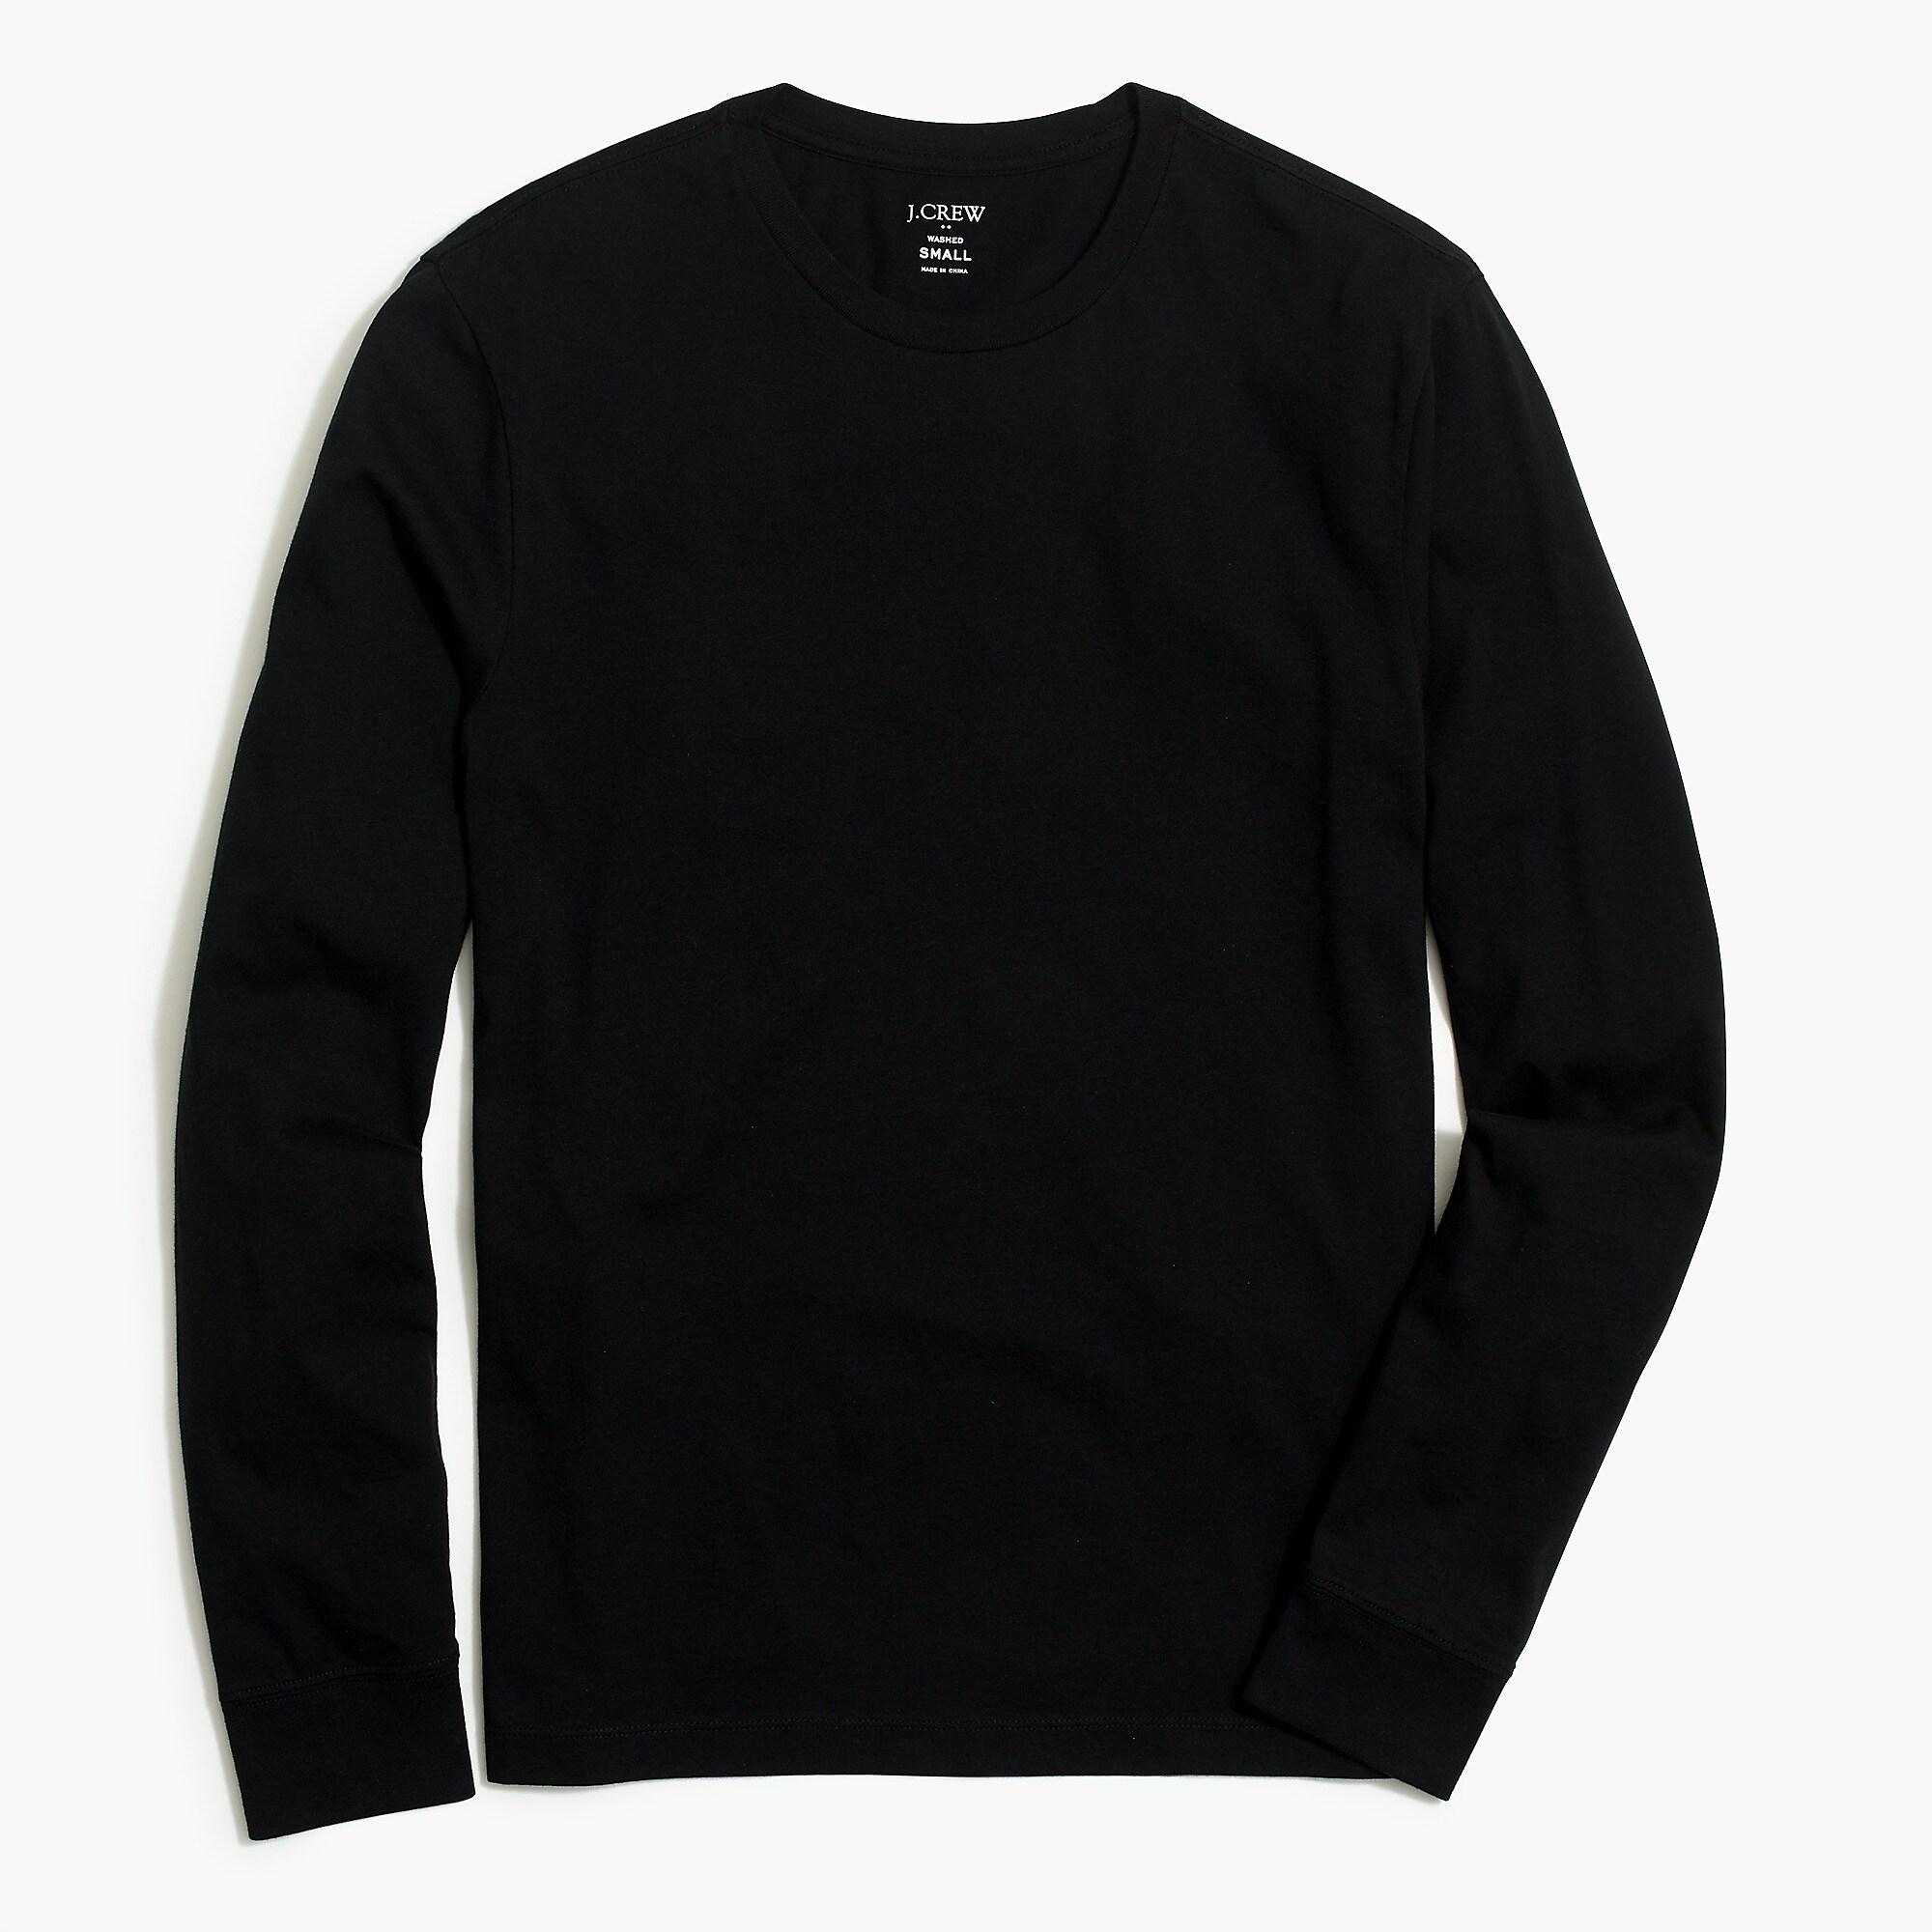 J.Crew Cotton Long-sleeve T-shirt in Black for Men - Lyst